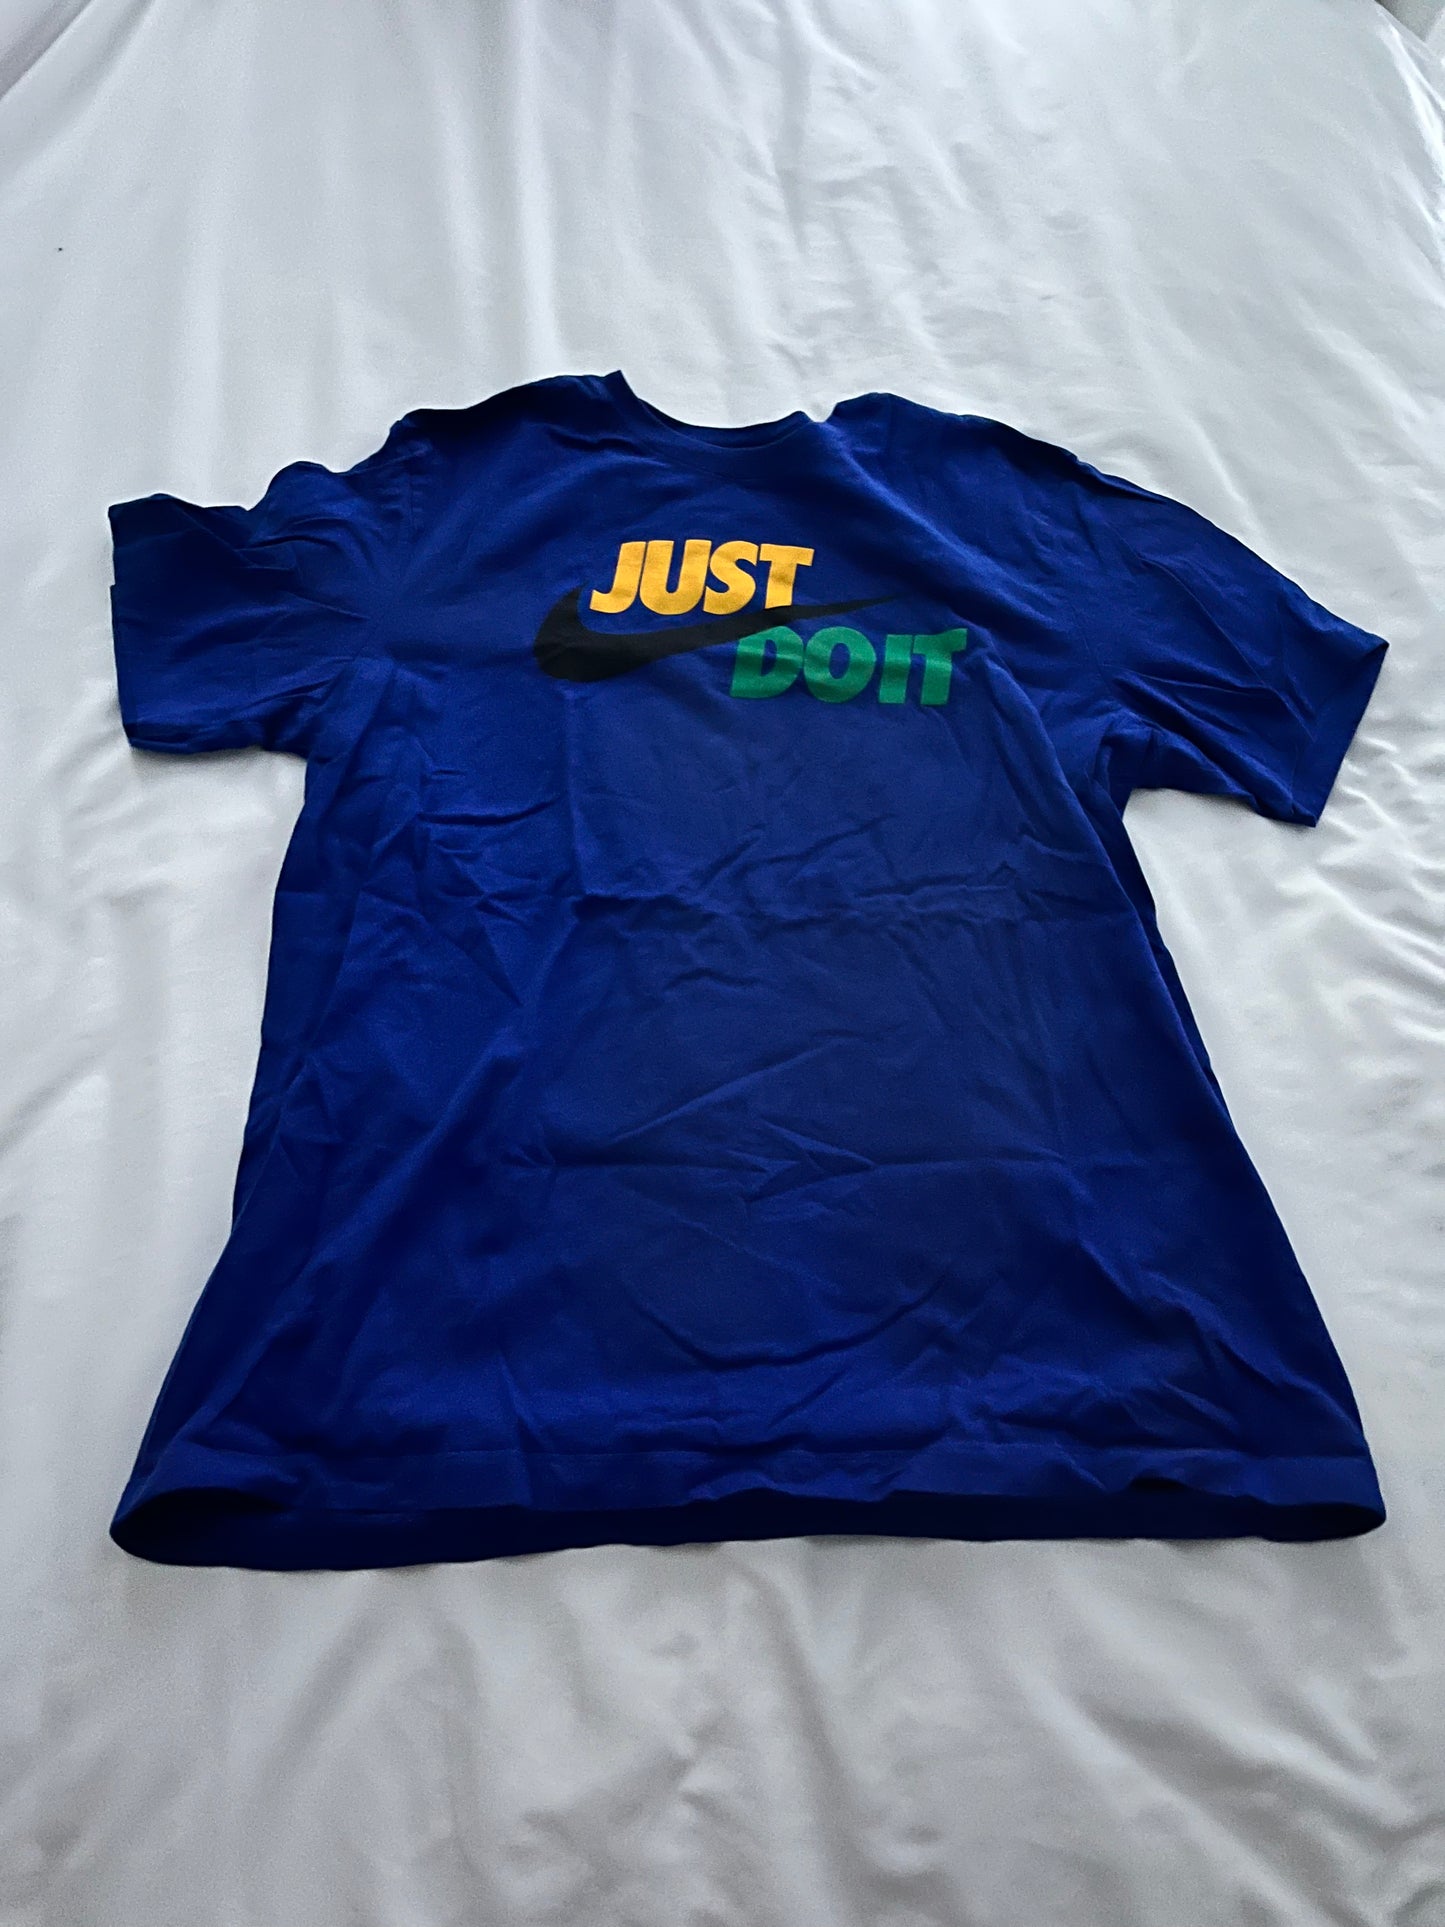 BALLERS: Jason's Iconic NIKE Teal Orange Windbraker Jacket and Blue Just Do It T-shirt (L)